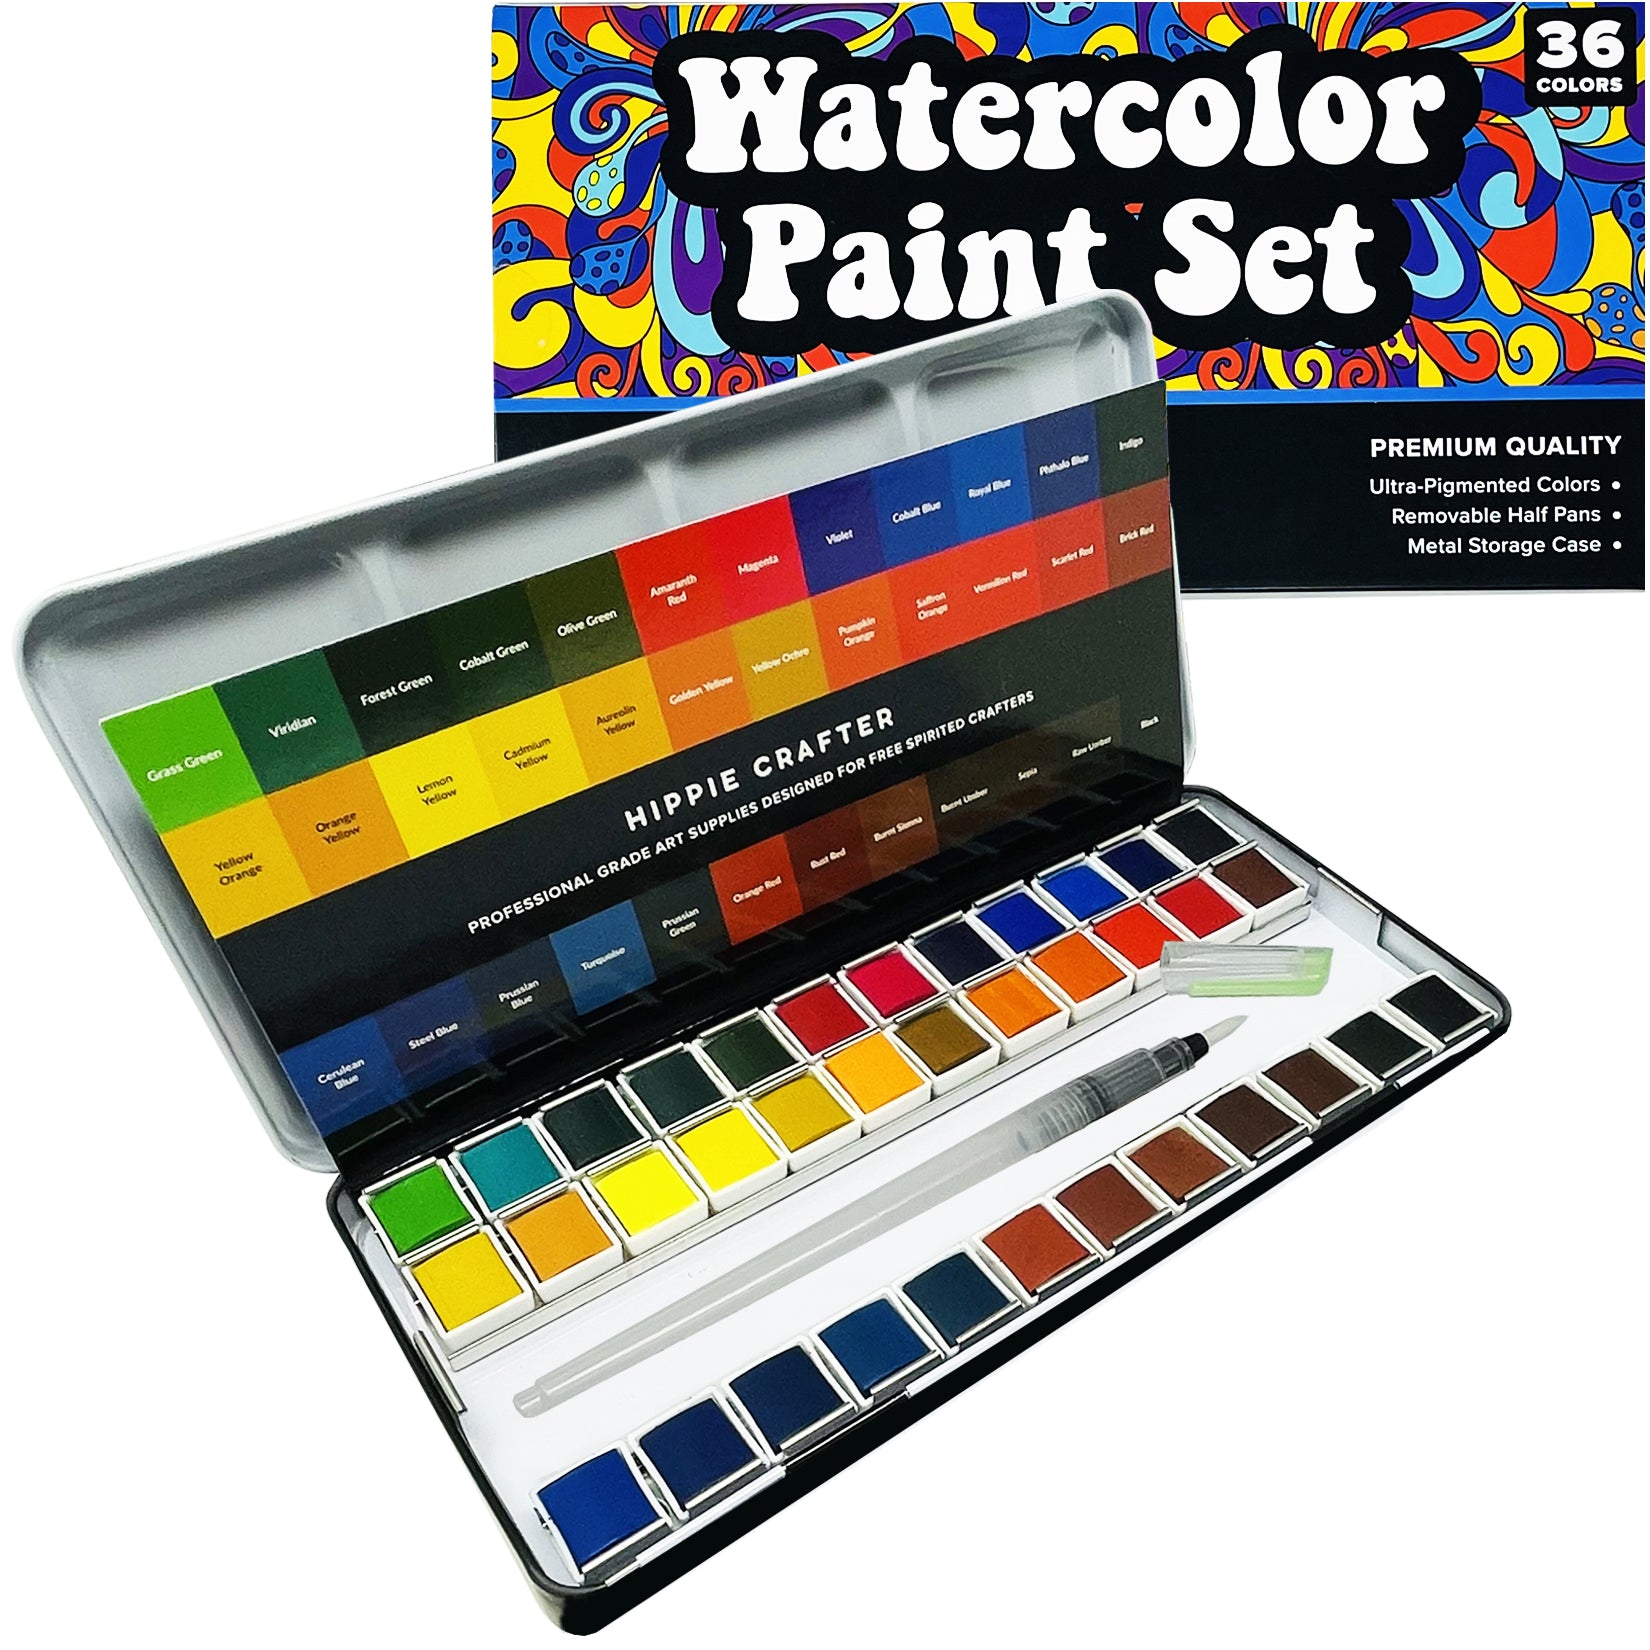 Watercolor Painting Kit,Portable Drawing Art Set for Adult,Kids,Beginner  Professional Art Supplies as Gift with Watercolor Cake,Watercolor Paints